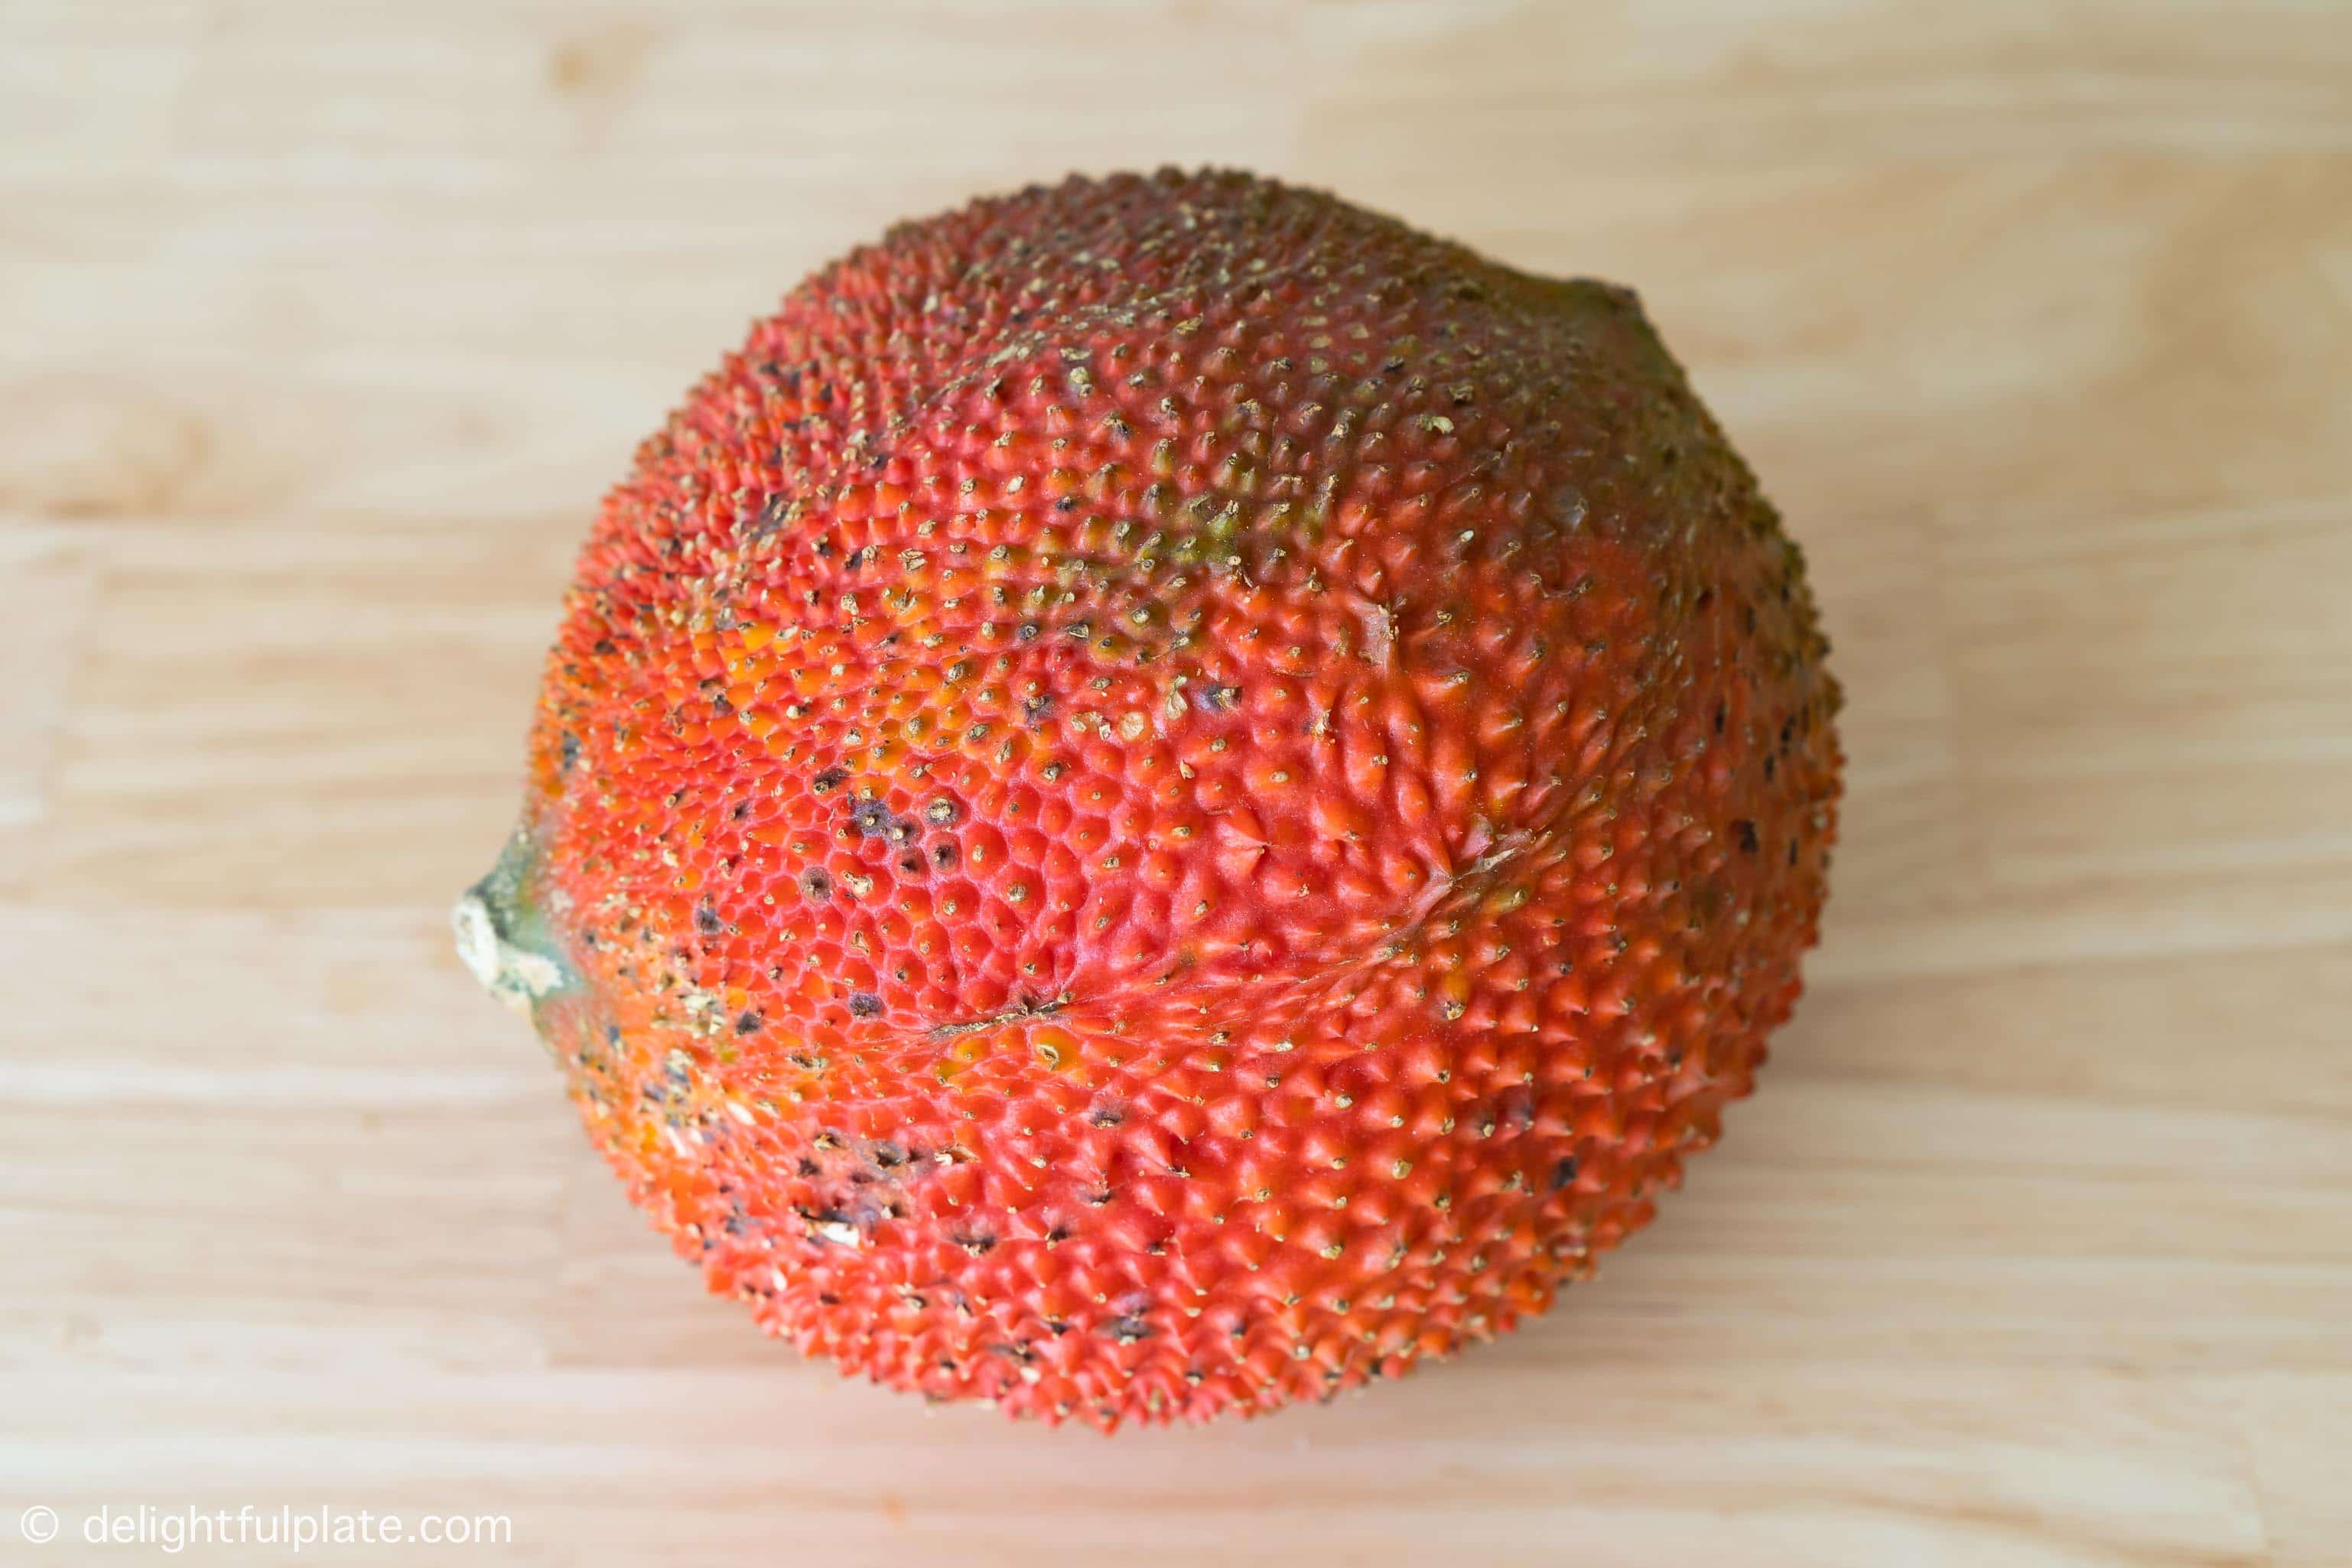 a Vietnamese gac fruit